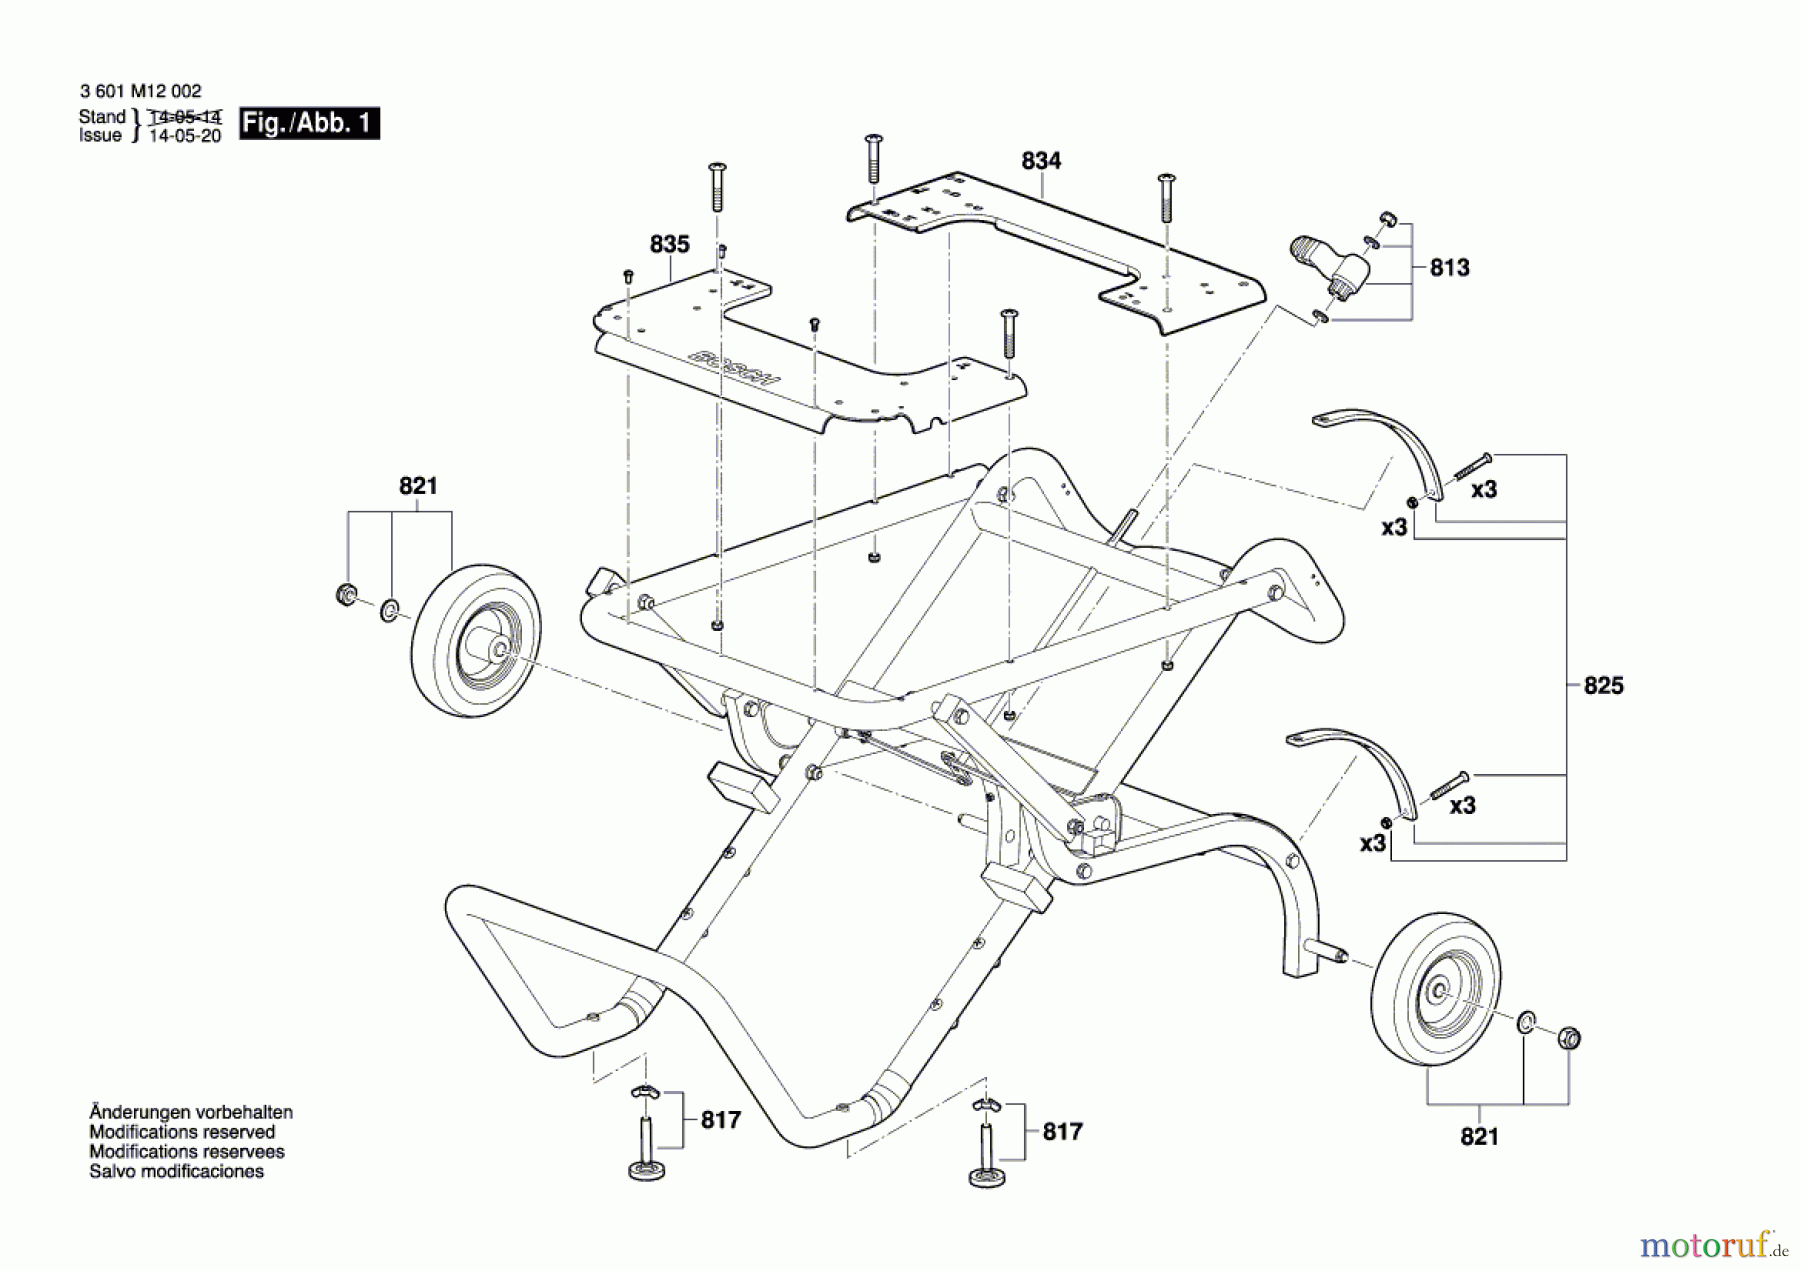  Bosch Werkzeug Stativ GTA 60 W Seite 1